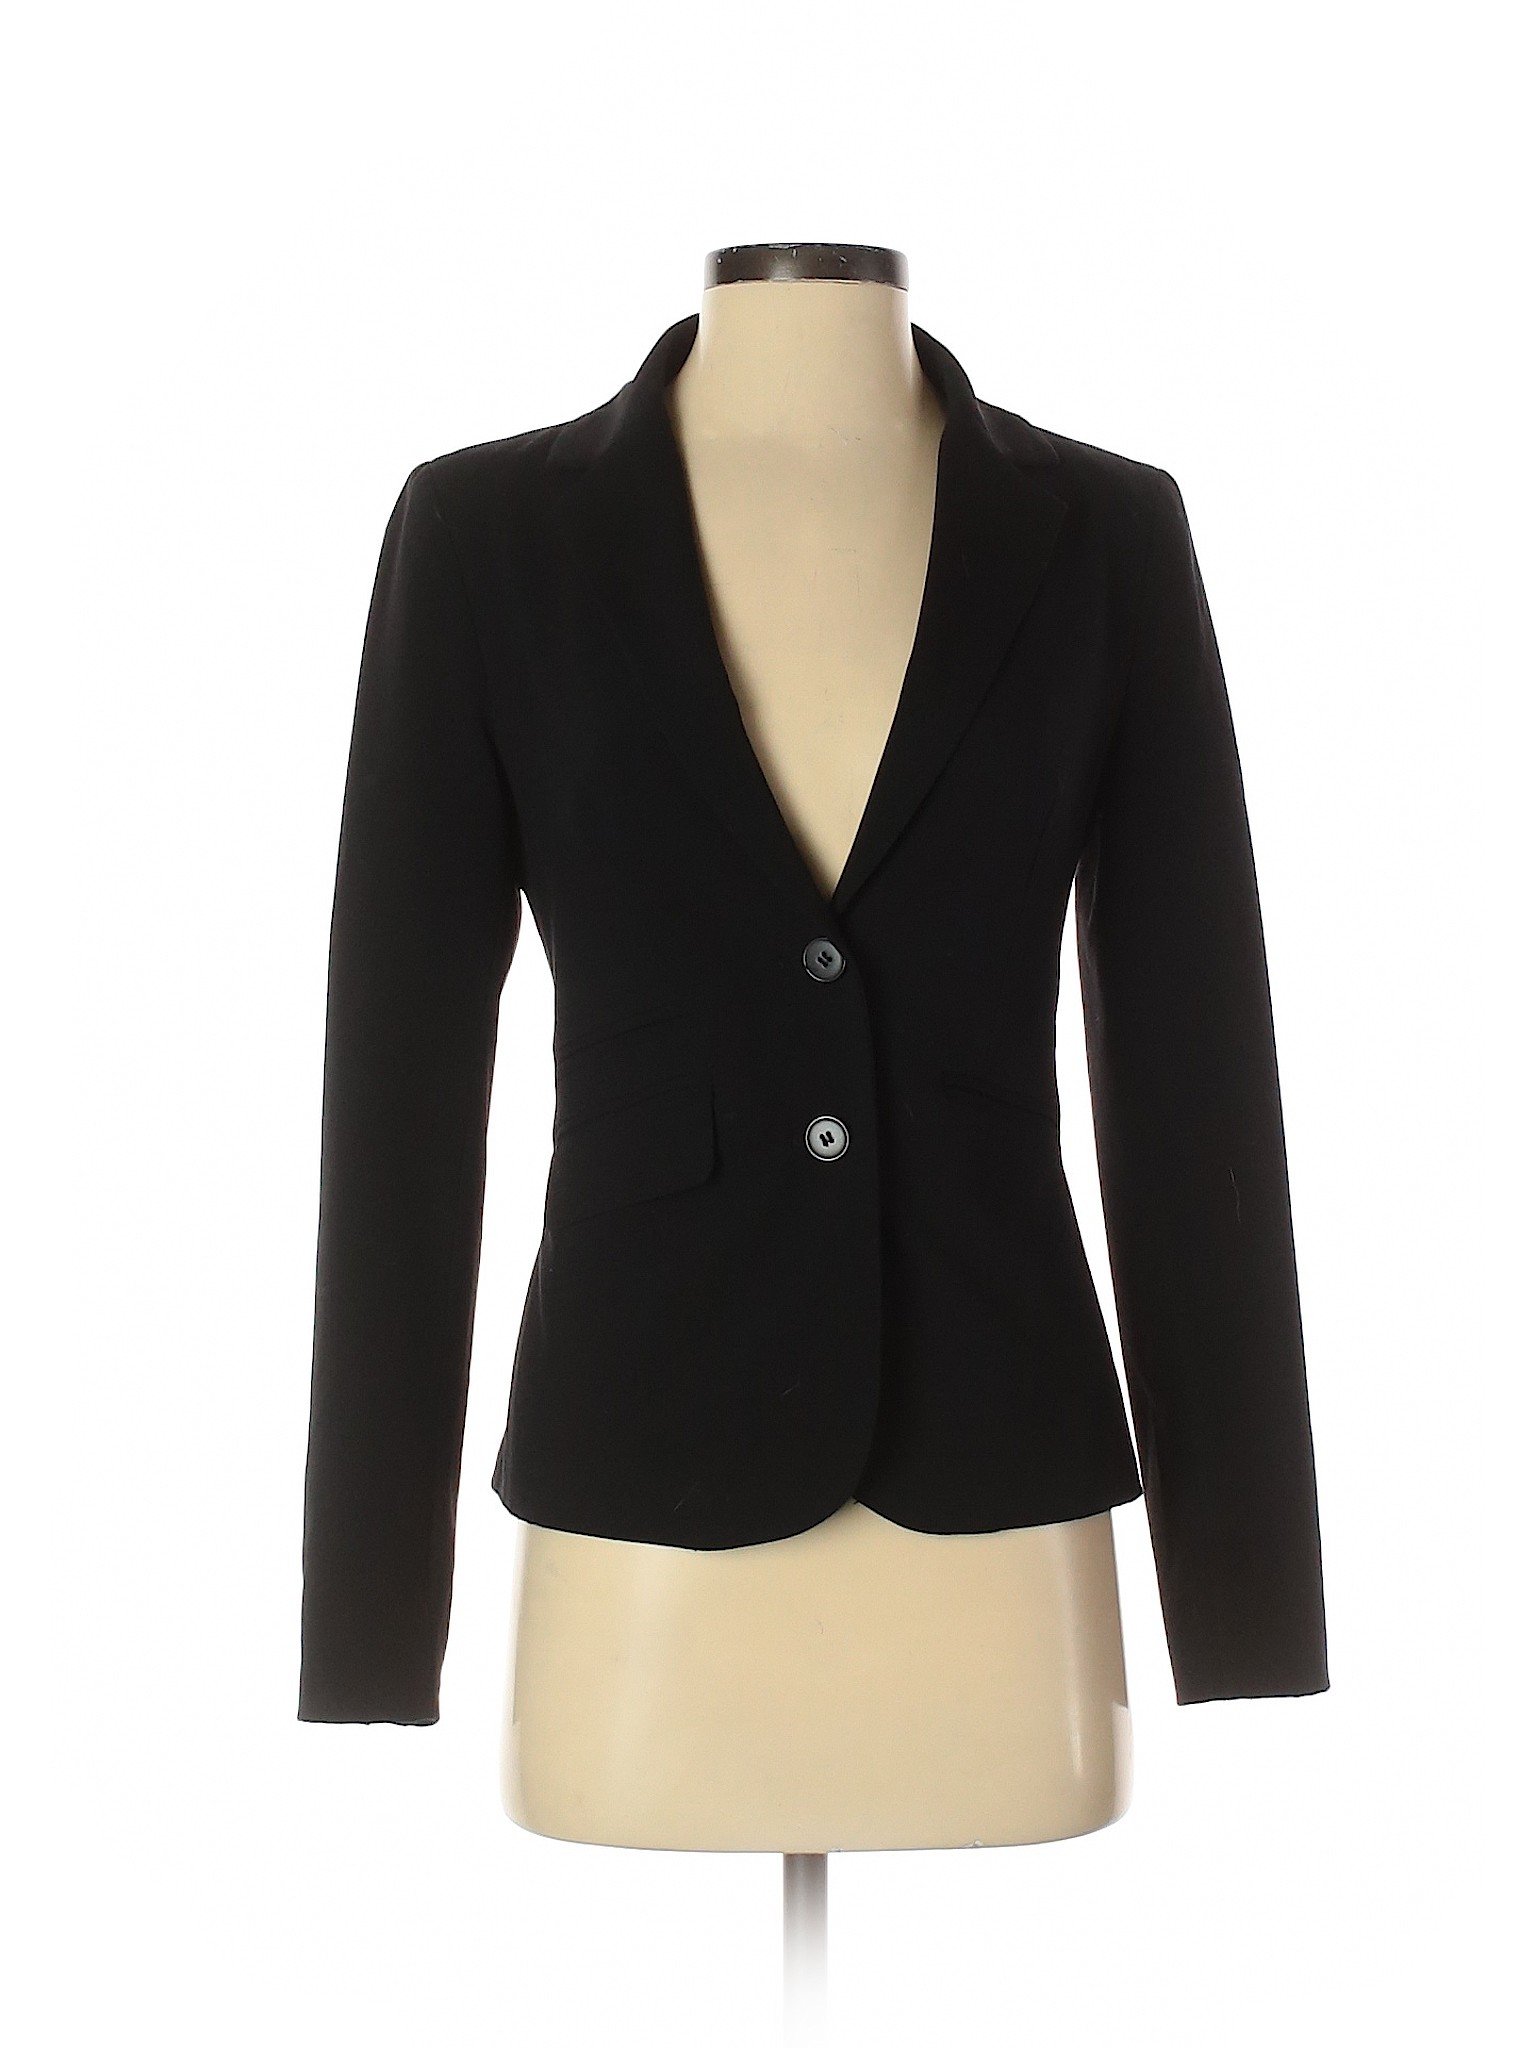 New York & Company Women Black Blazer 4 | eBay